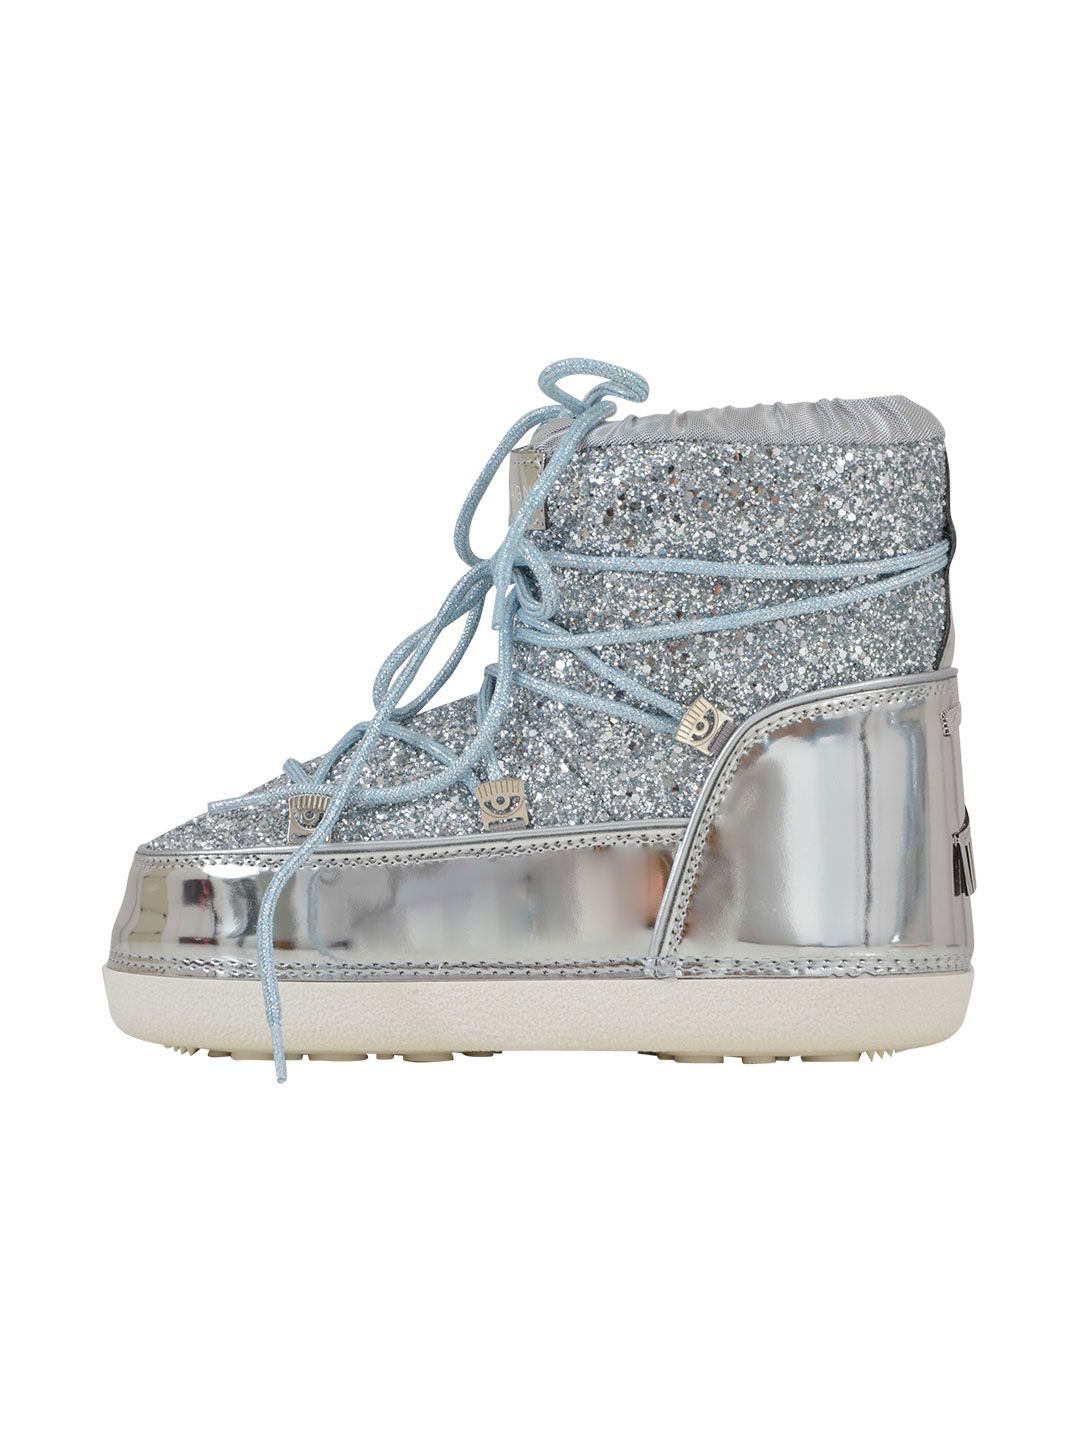 Chiara Ferragni - Chiara Ferragni Glitter Moon Boot - Silver, Women's ...